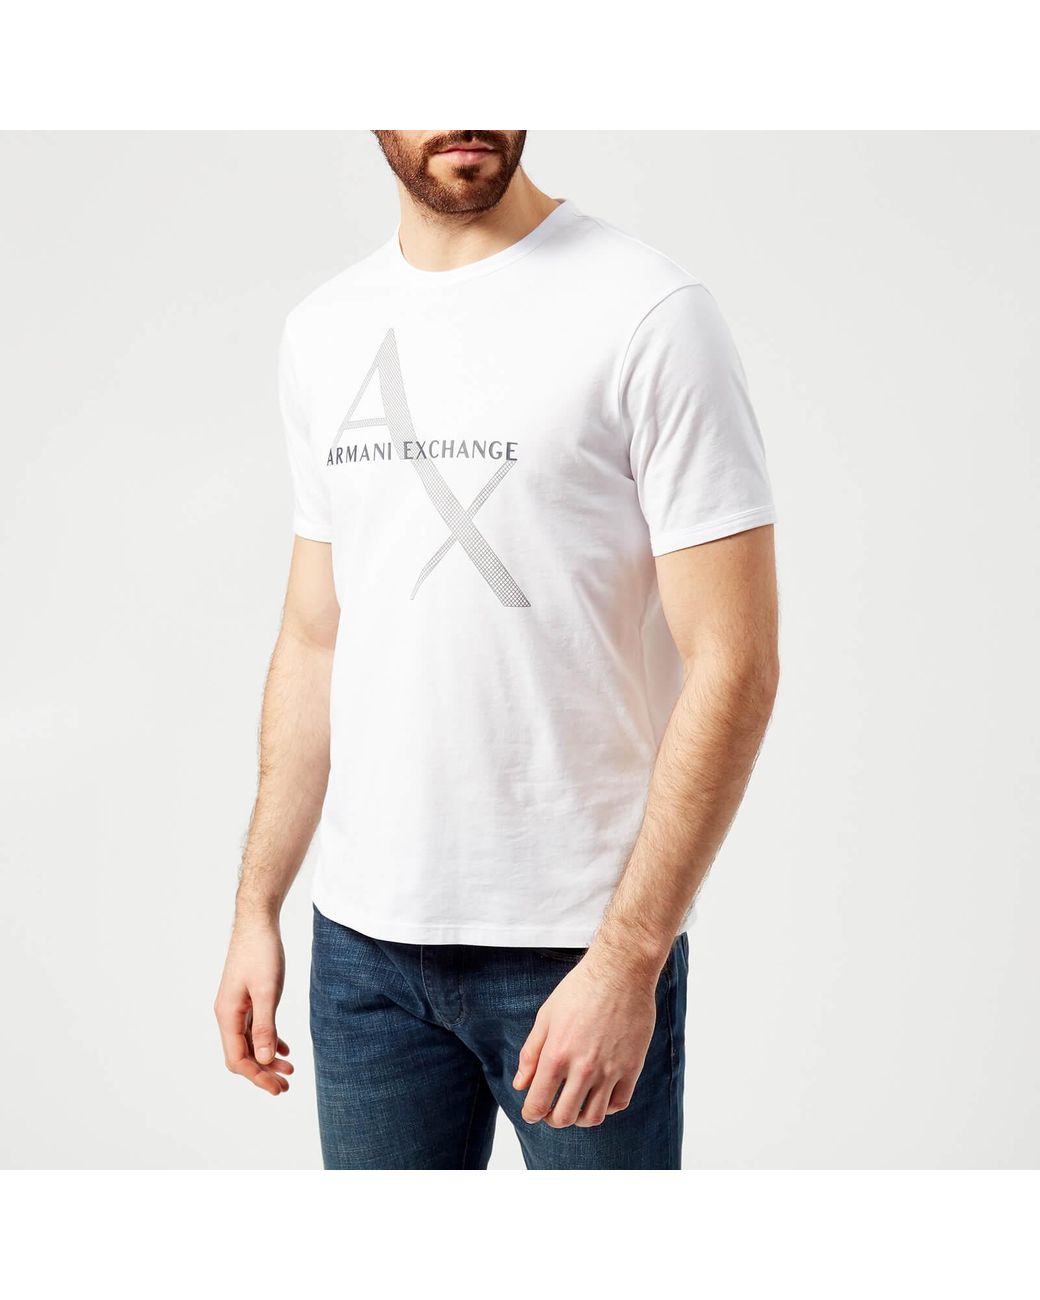 armani exchange logo t shirt